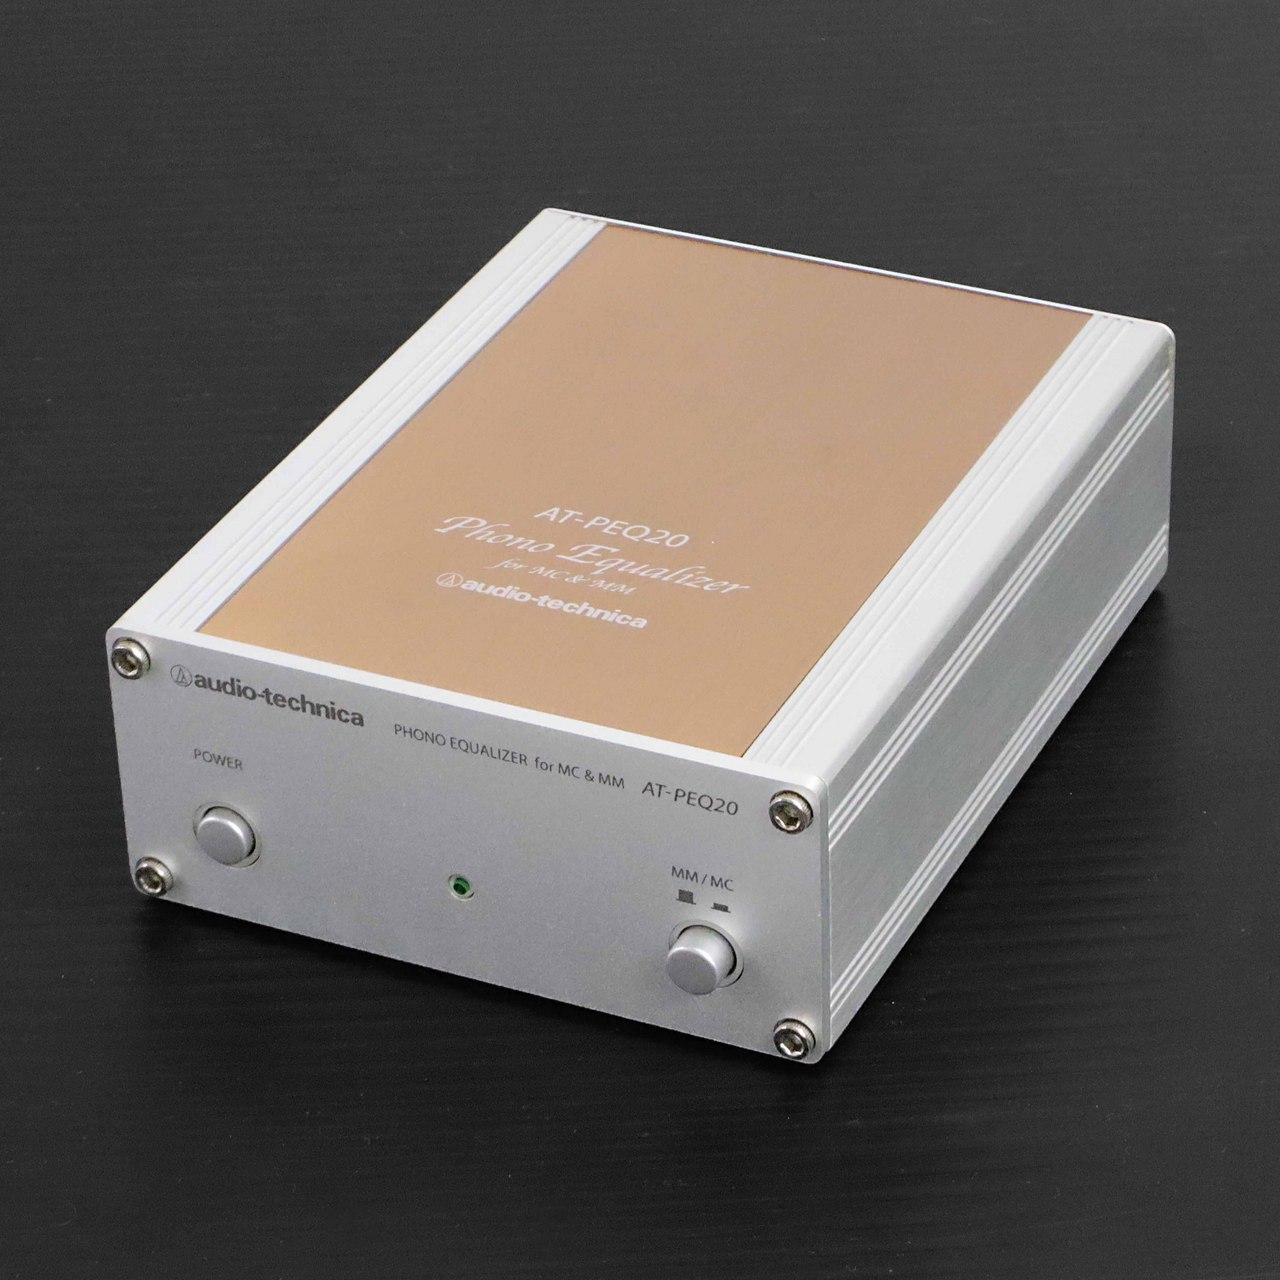 AT-PEQ20 MM/MC型カートリッジ対応高音質フォノイコライザー。